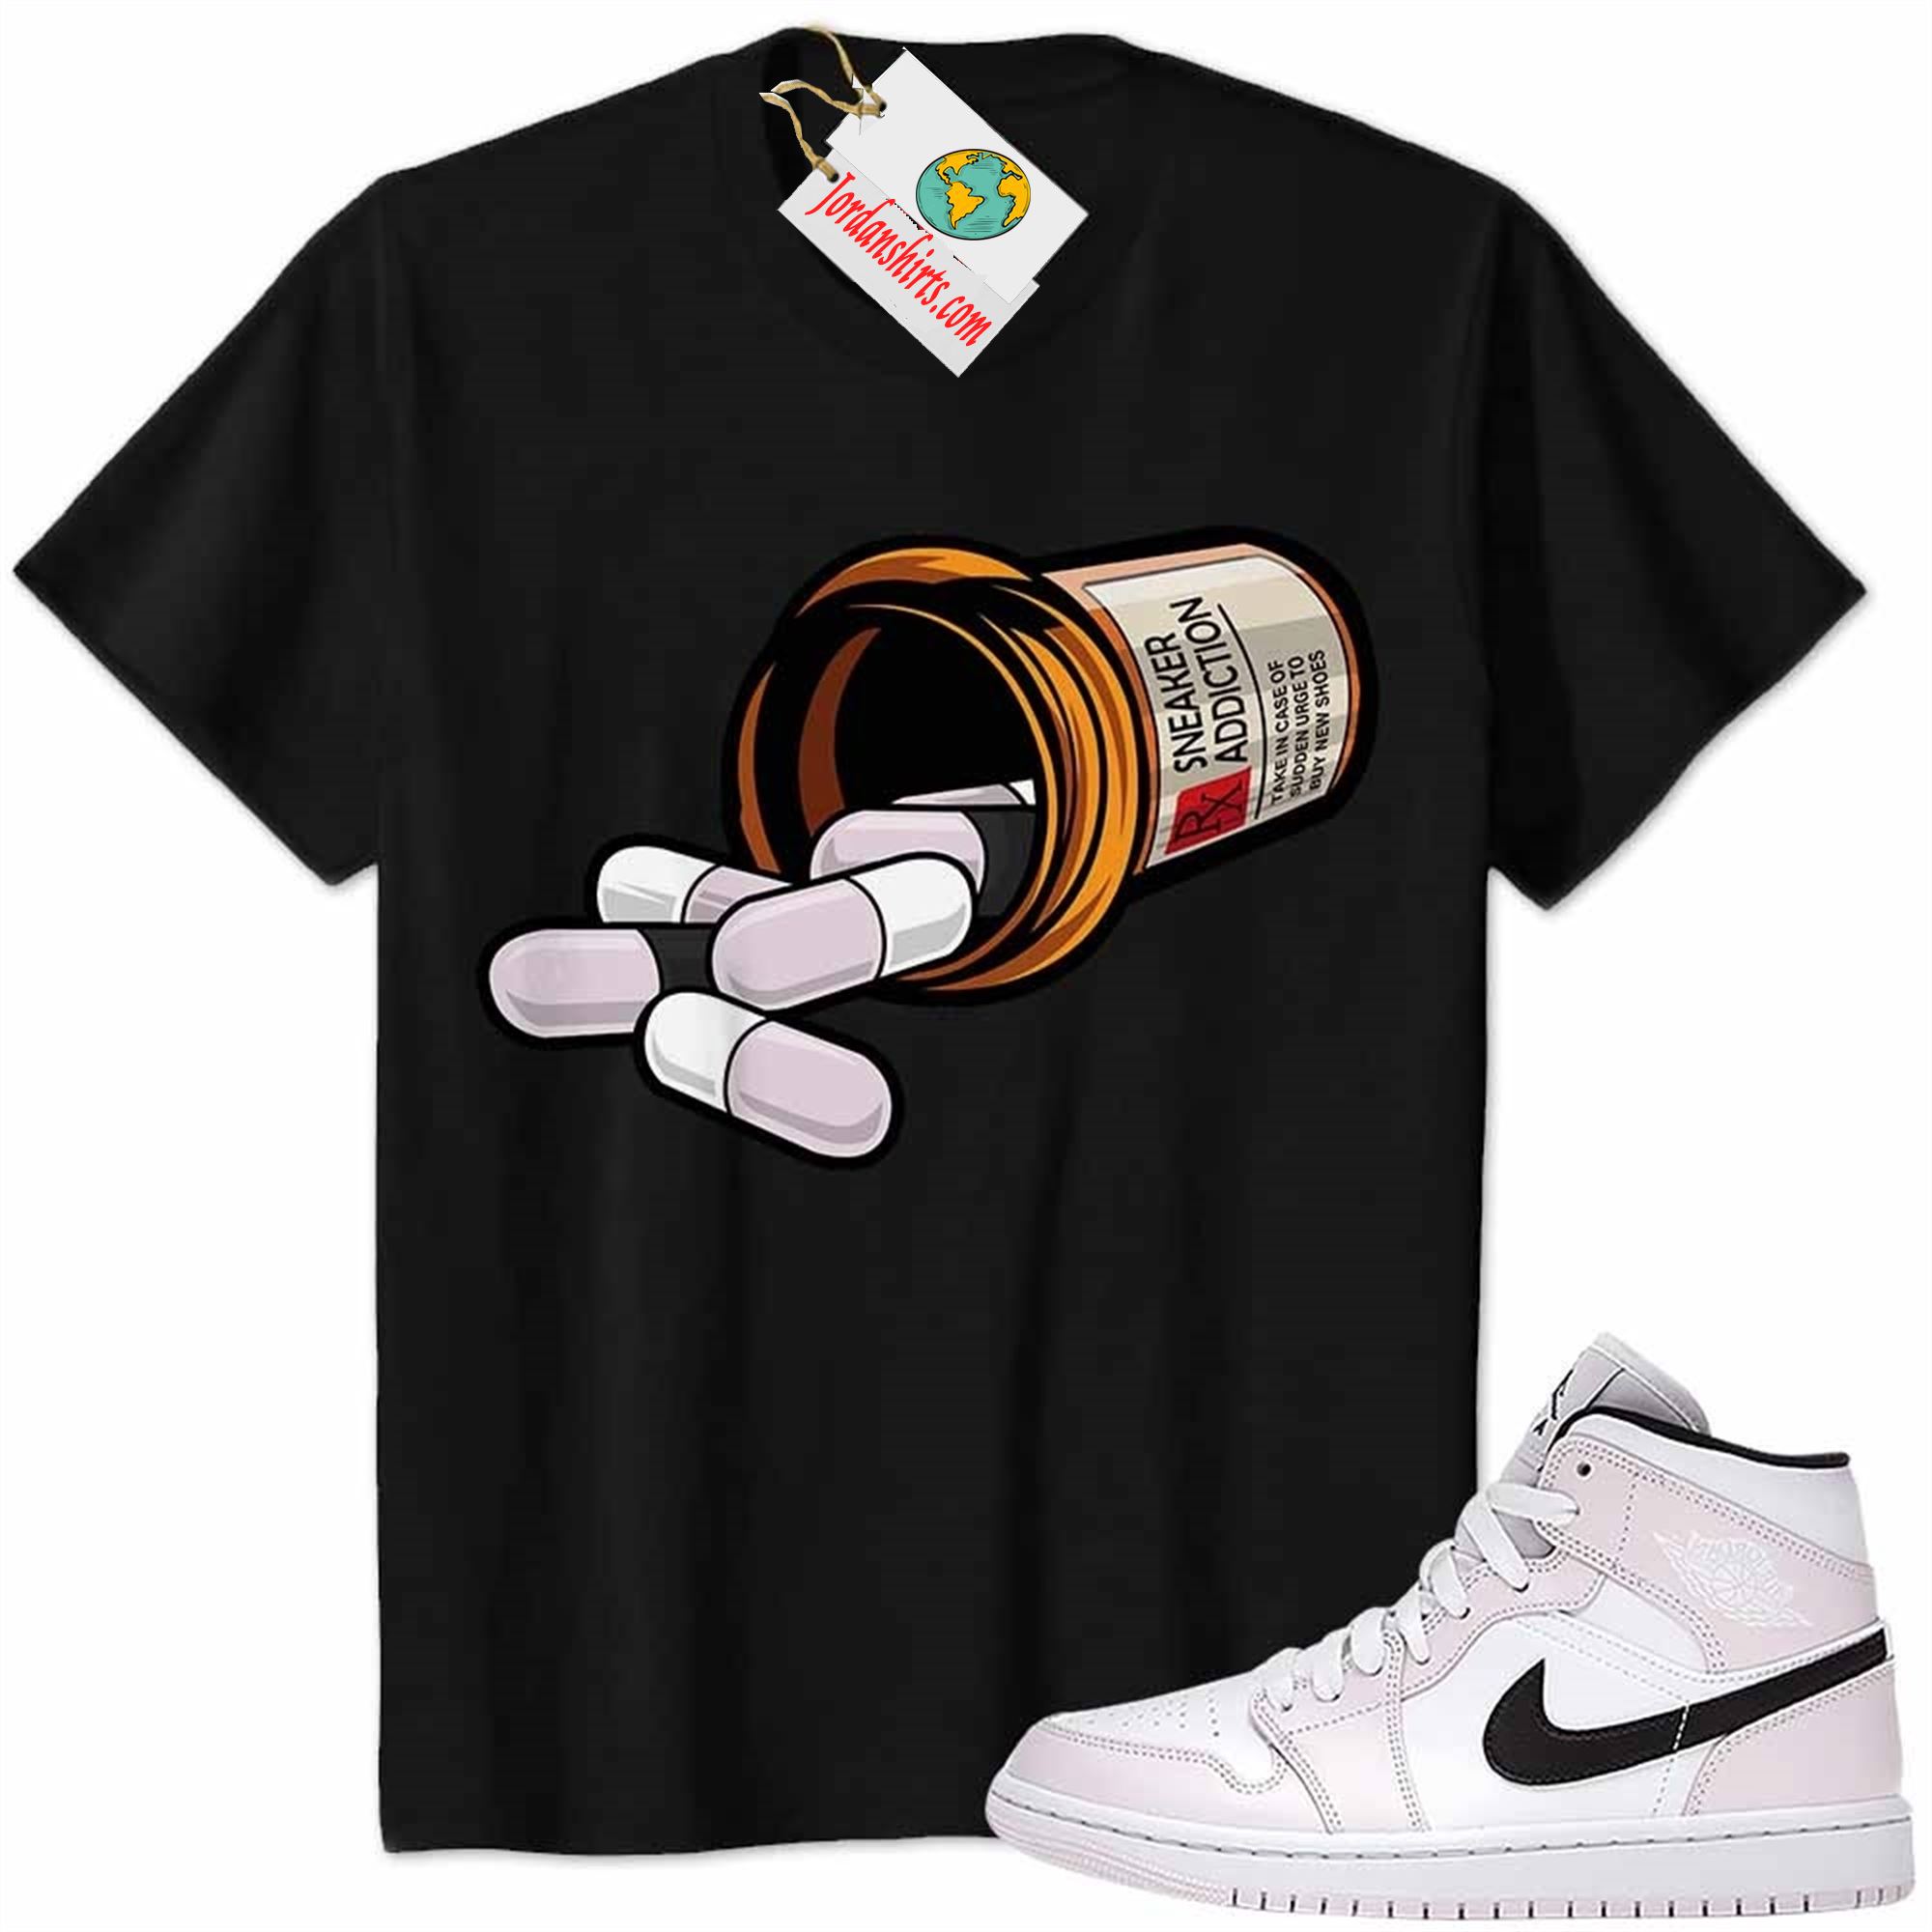 Jordan 1 Shirt, Rx Drugs Pill Bottle Sneaker Addiction Black Air Jordan 1 Barely Rose 1s Plus Size Up To 5xl